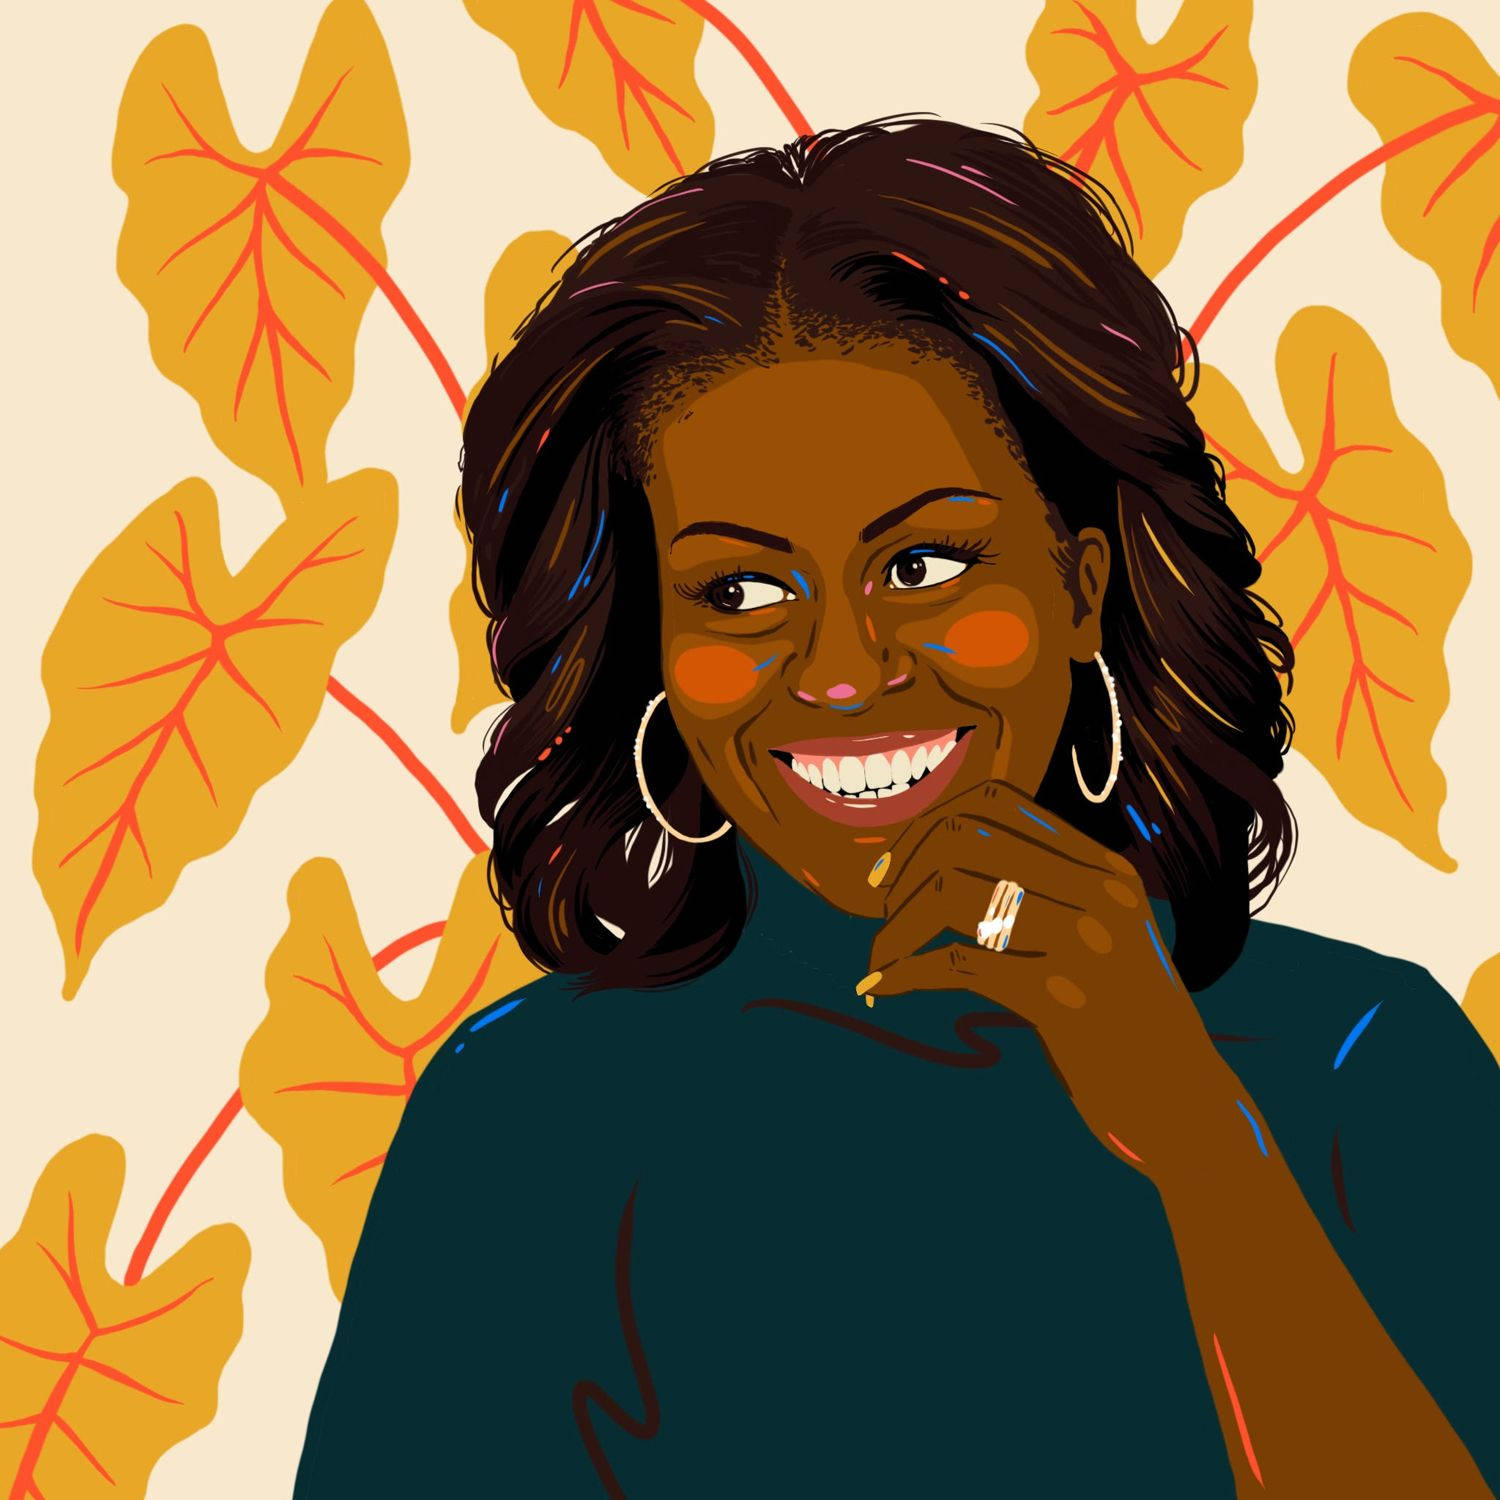 Michelle Obama Digital Art